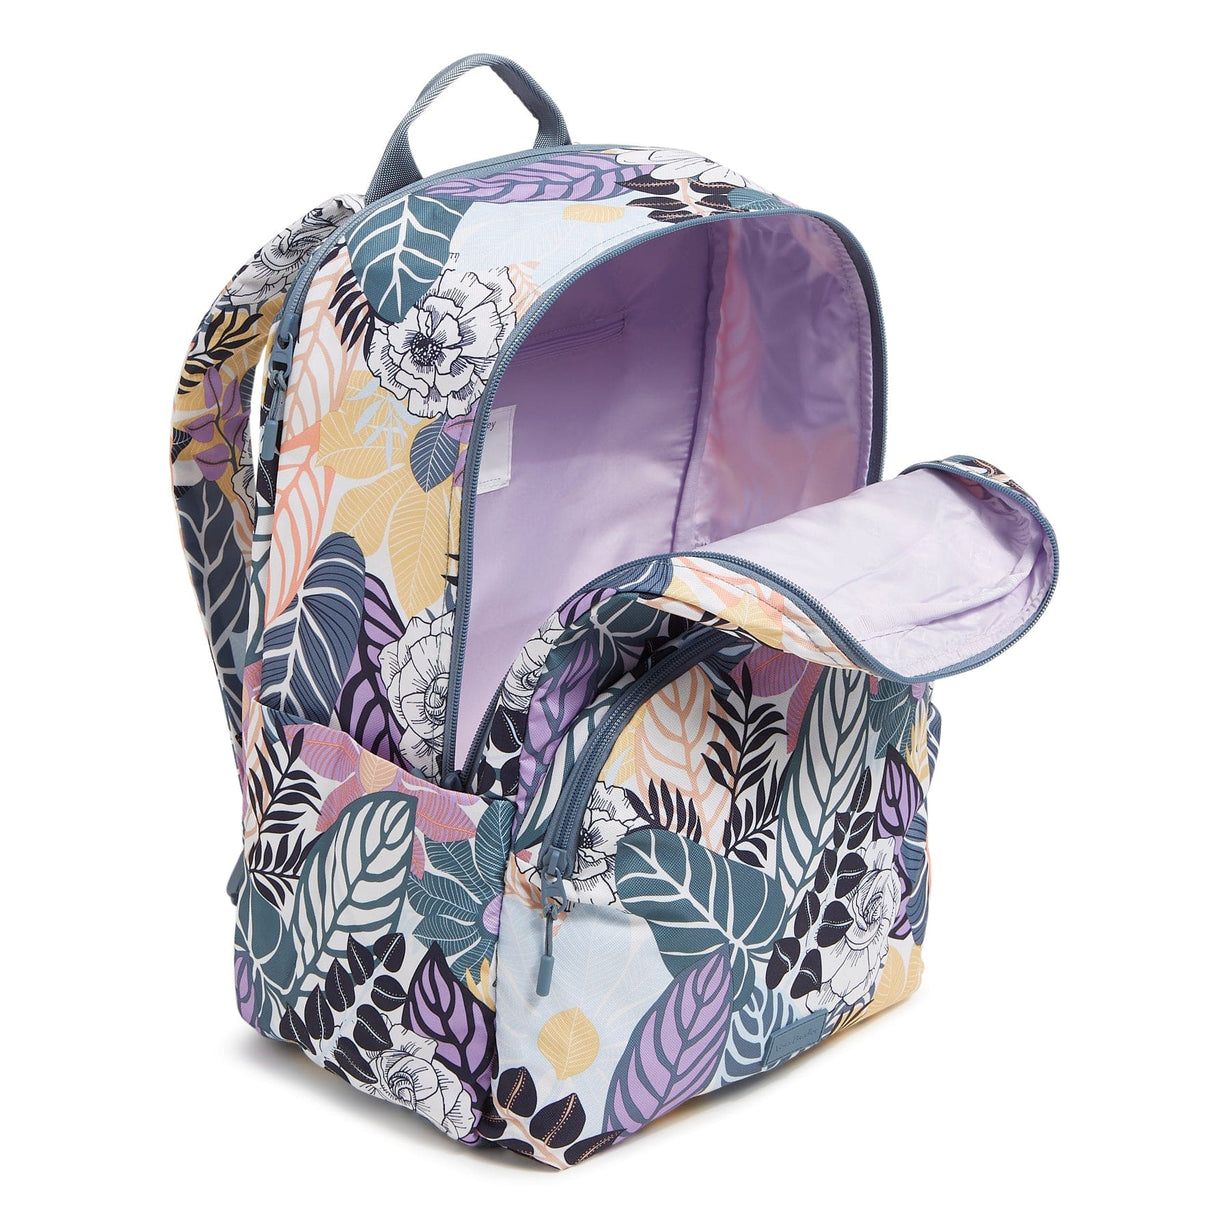 Vera Bradley Essential Large Backpack - Mod Paisley 